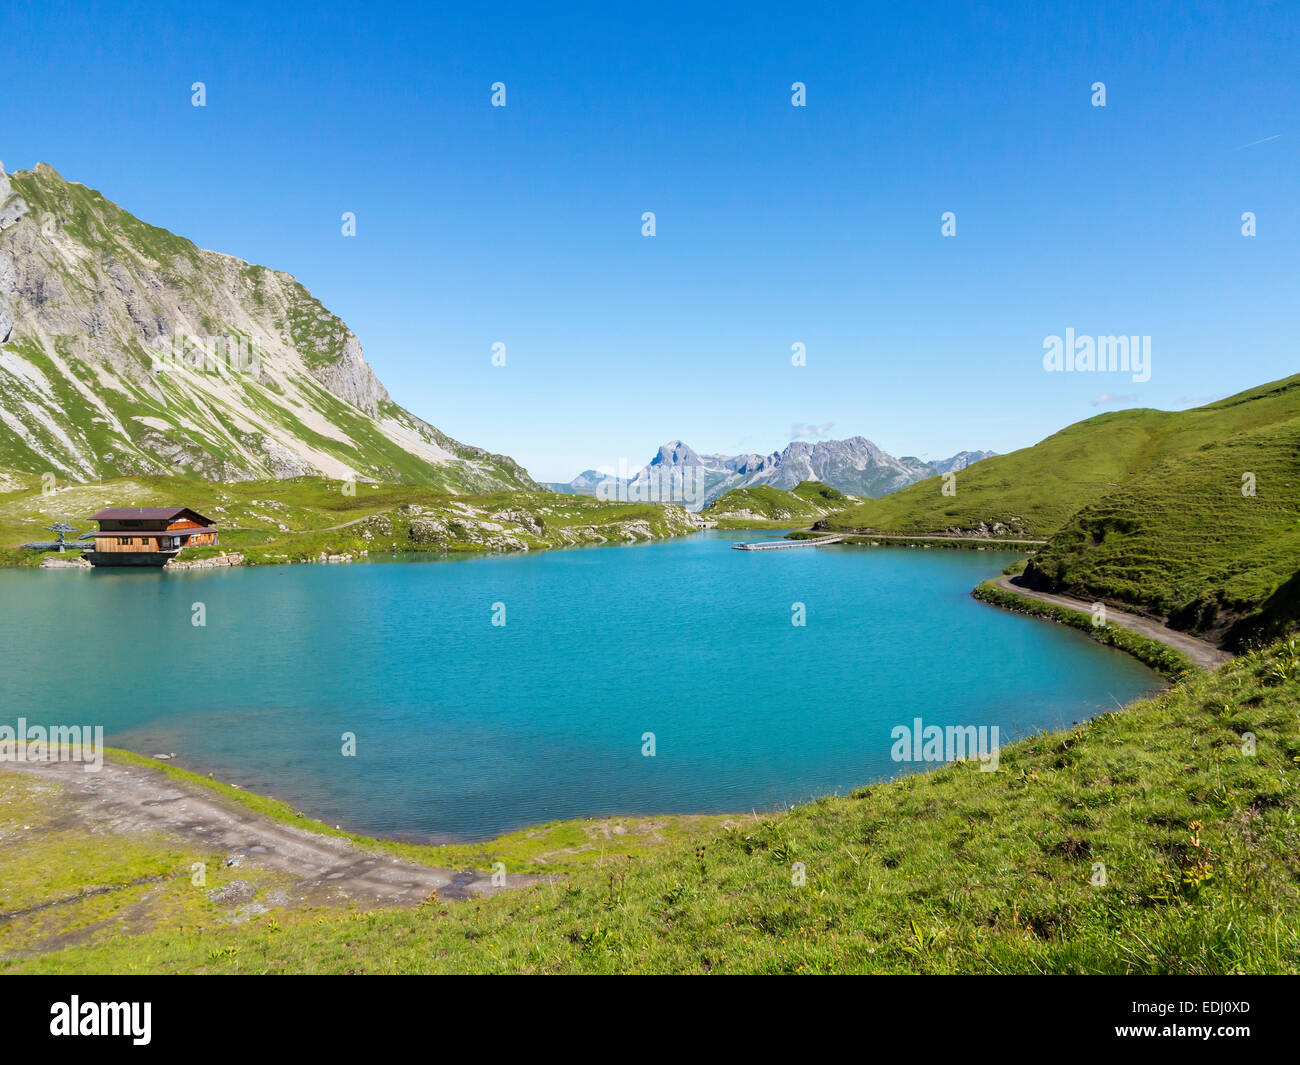 Zürser See lake, Lechtal Alps, Zürs, Lechtal valley, Austria Stock Photo